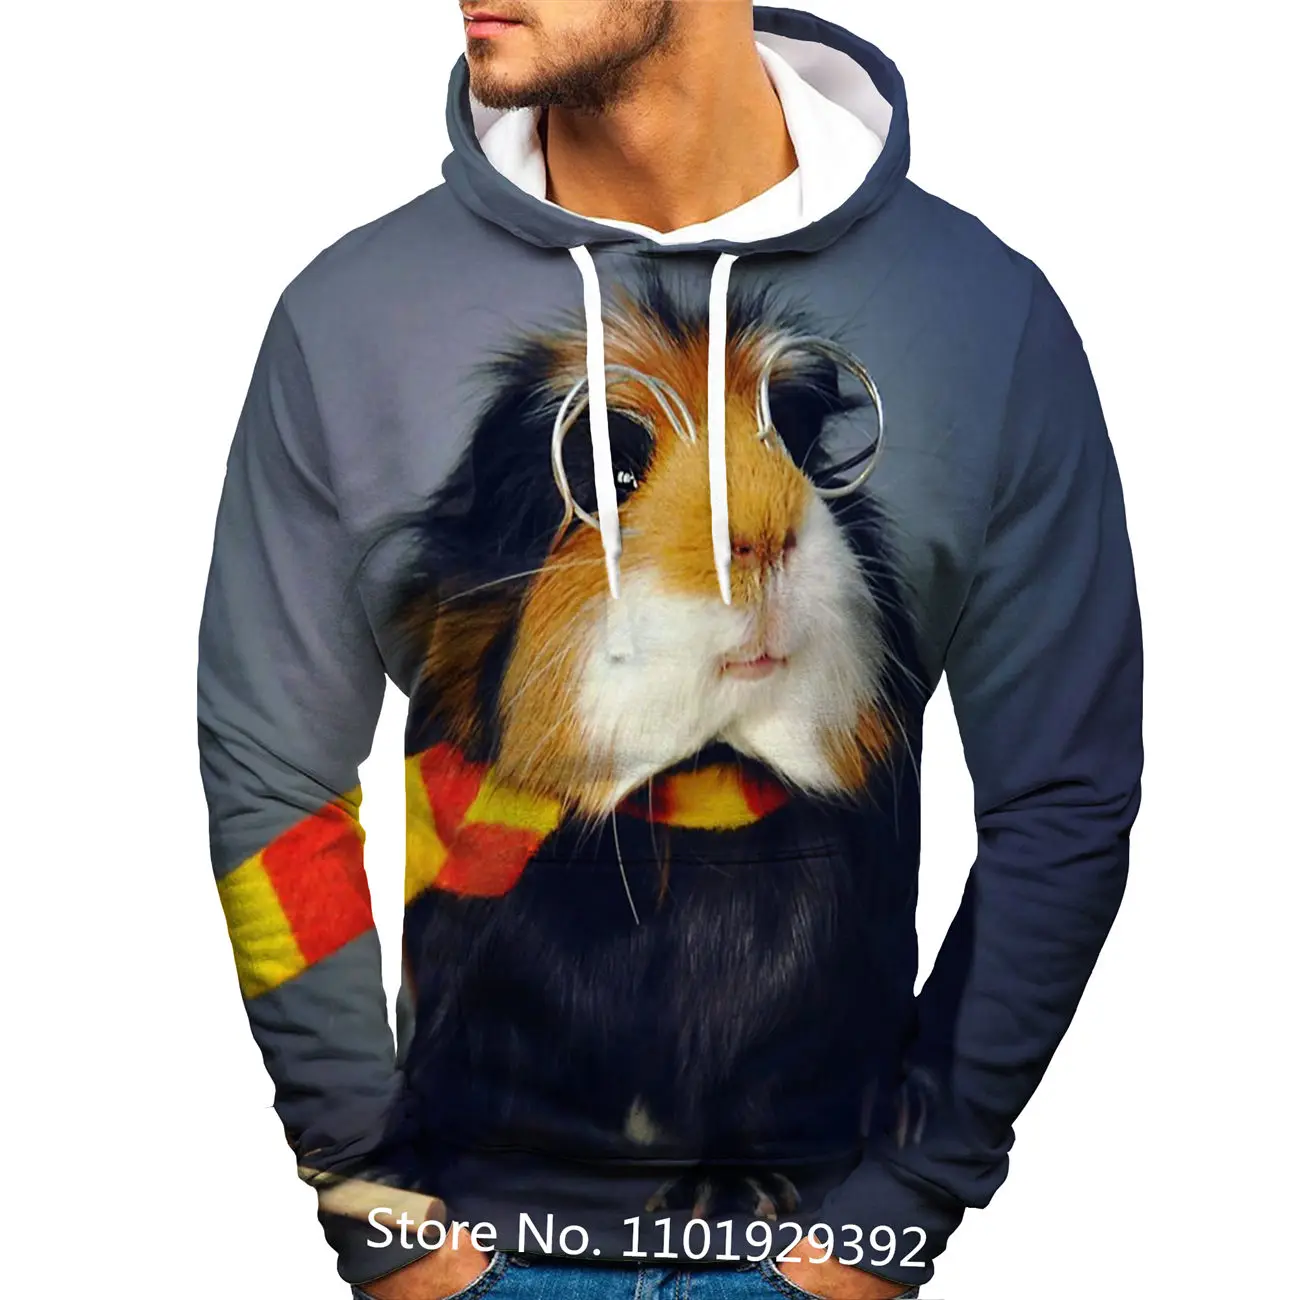 Mens Mouse Hoodies Fashion Animal 3D Printed Sweatshirts Unisex Harajuku Hip Hop Hoodie Casual Pullover